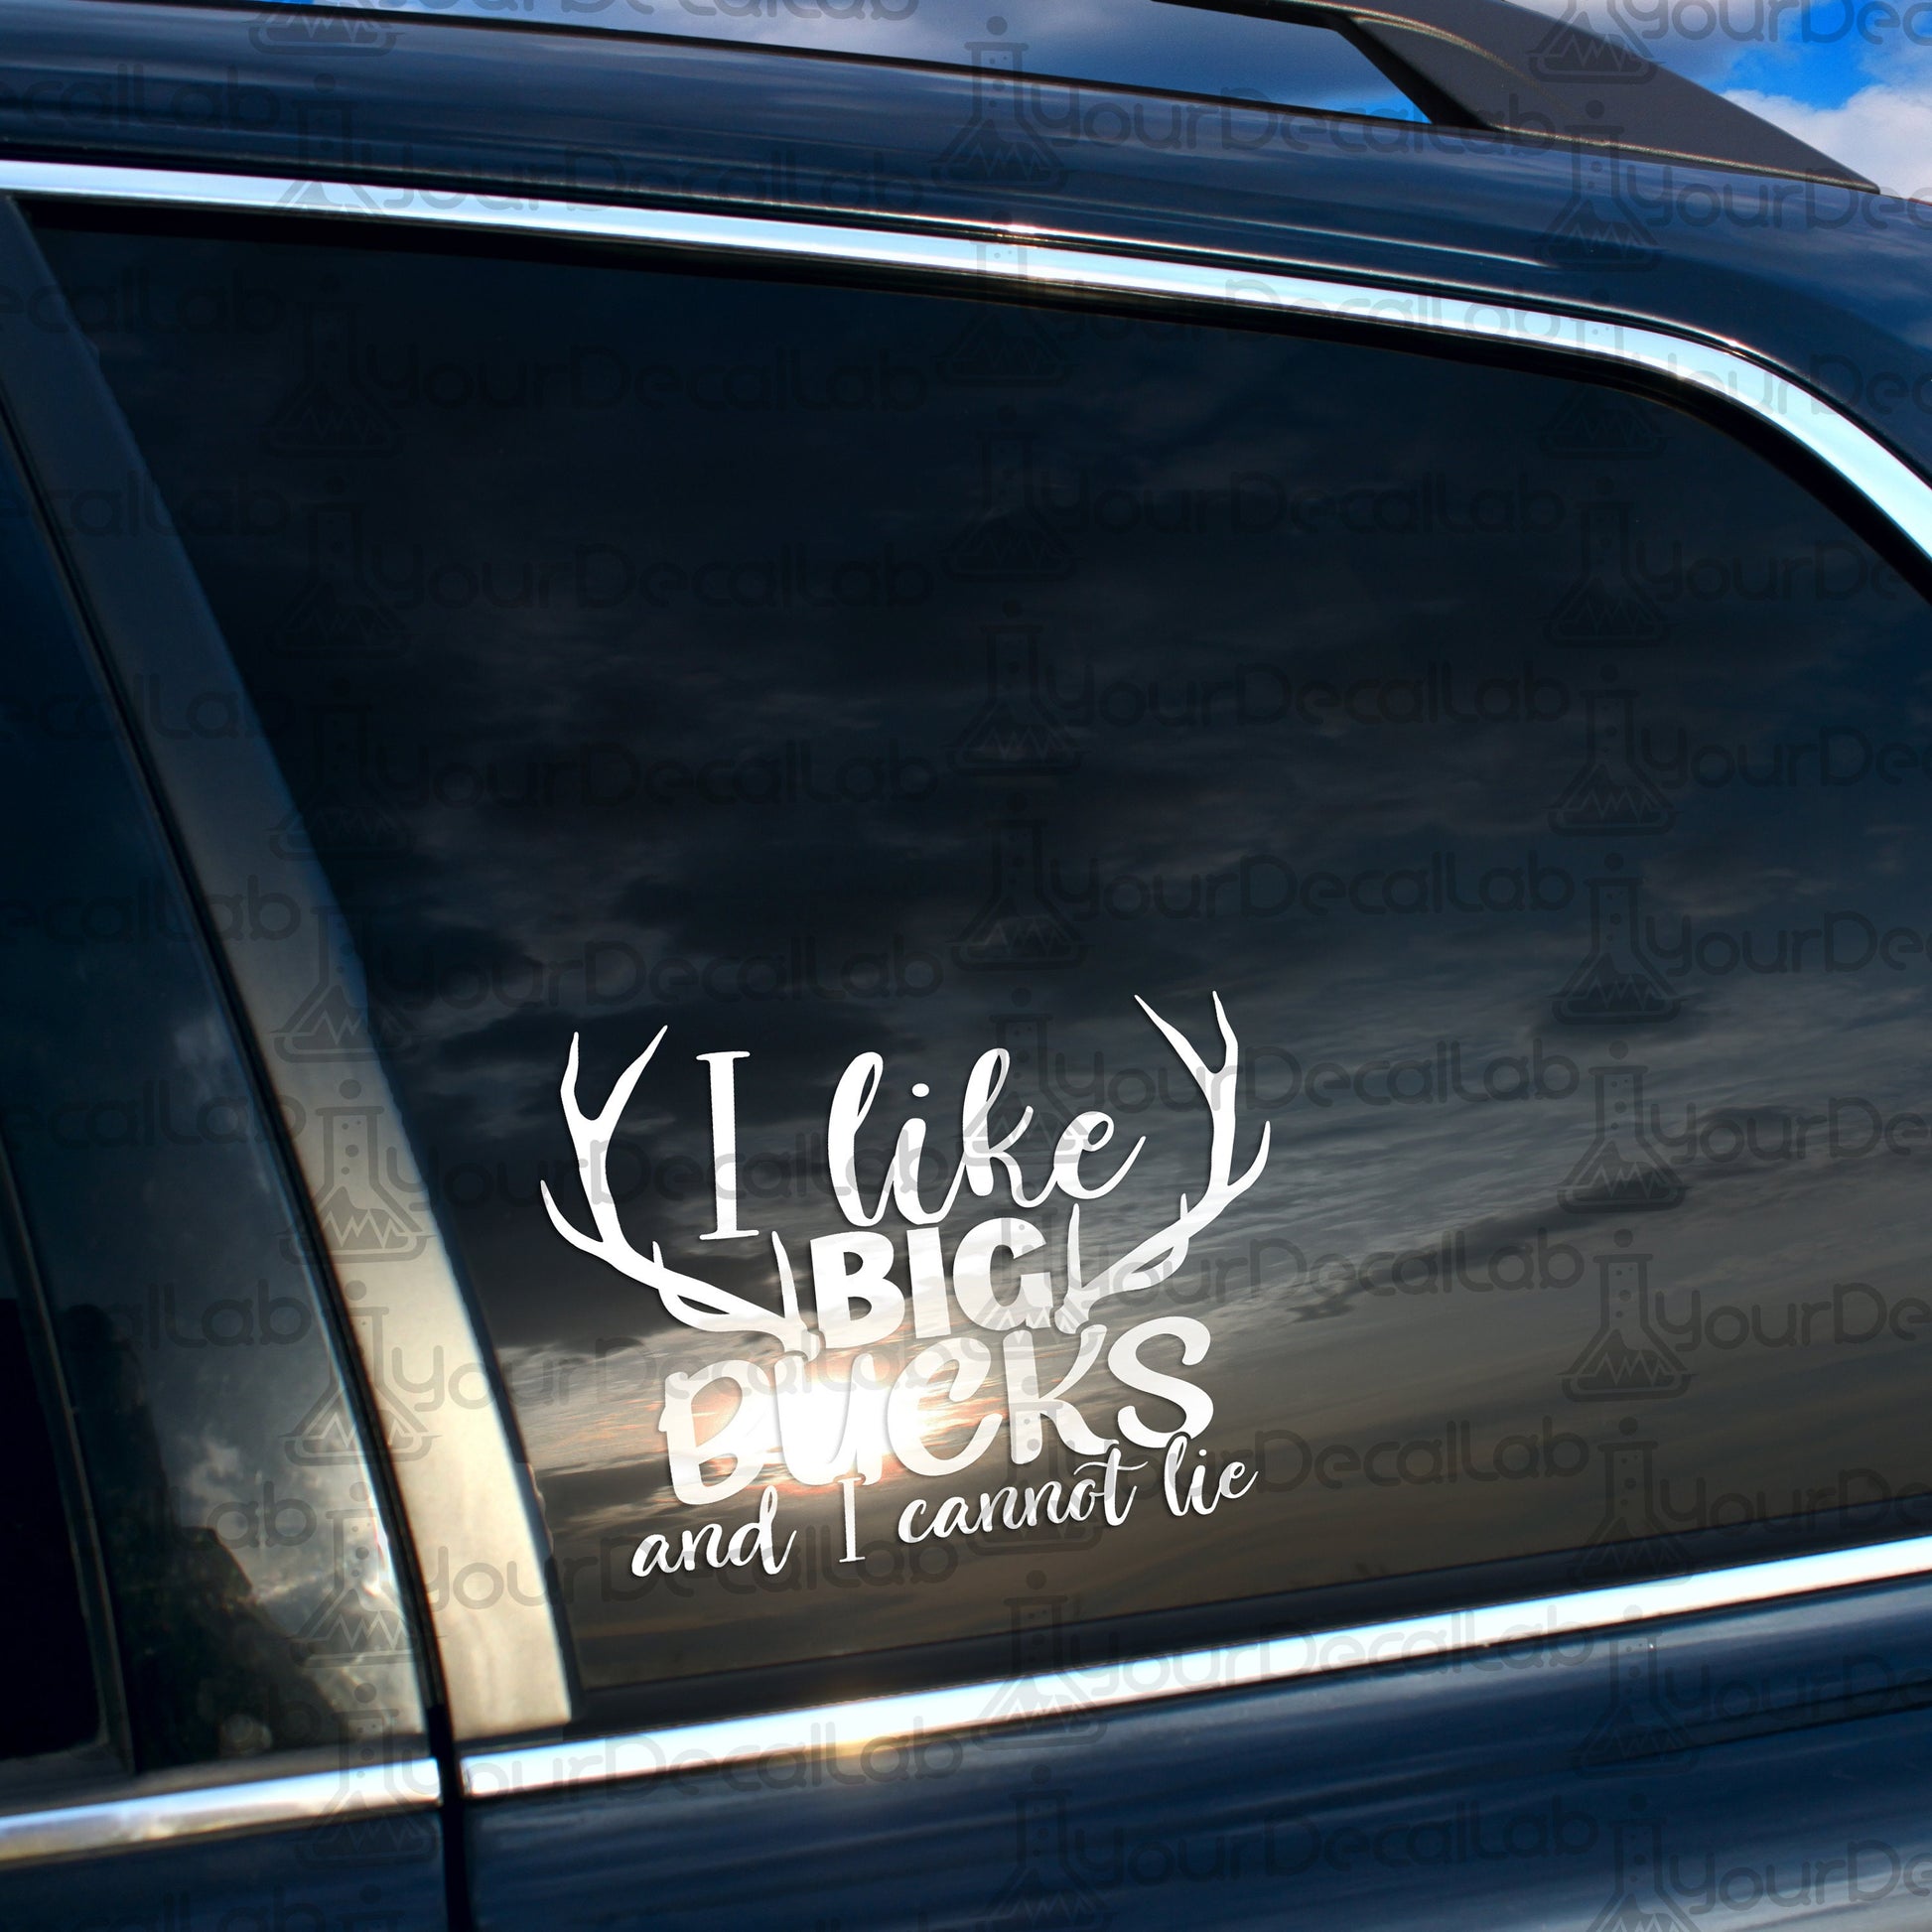 a car with a sticker that says i like big bucks and i cannot lie